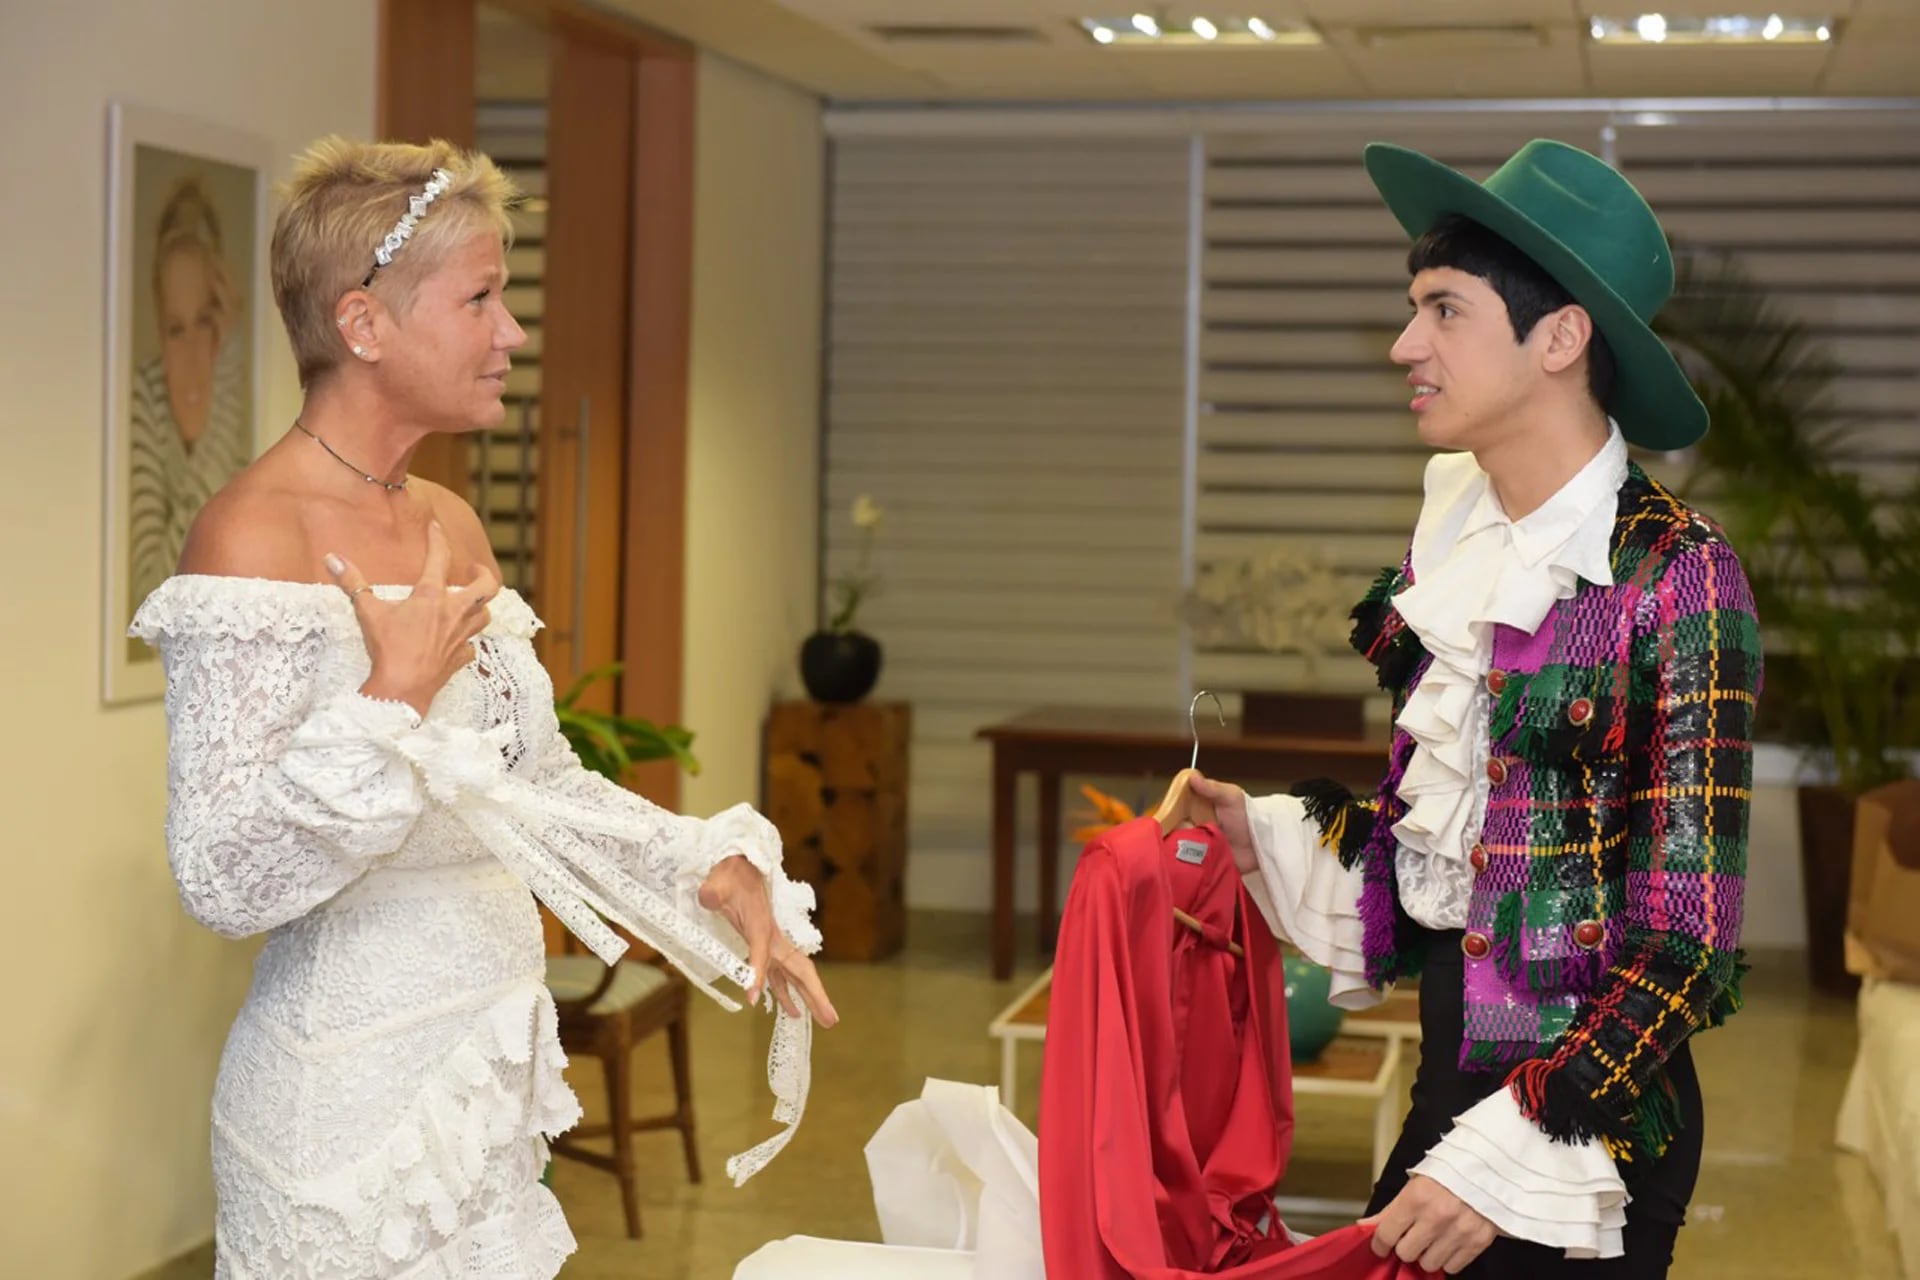 Santiago Artemis viajó a Rio de Janeiro para vestir a Xuxa, que se emocionó por su talento